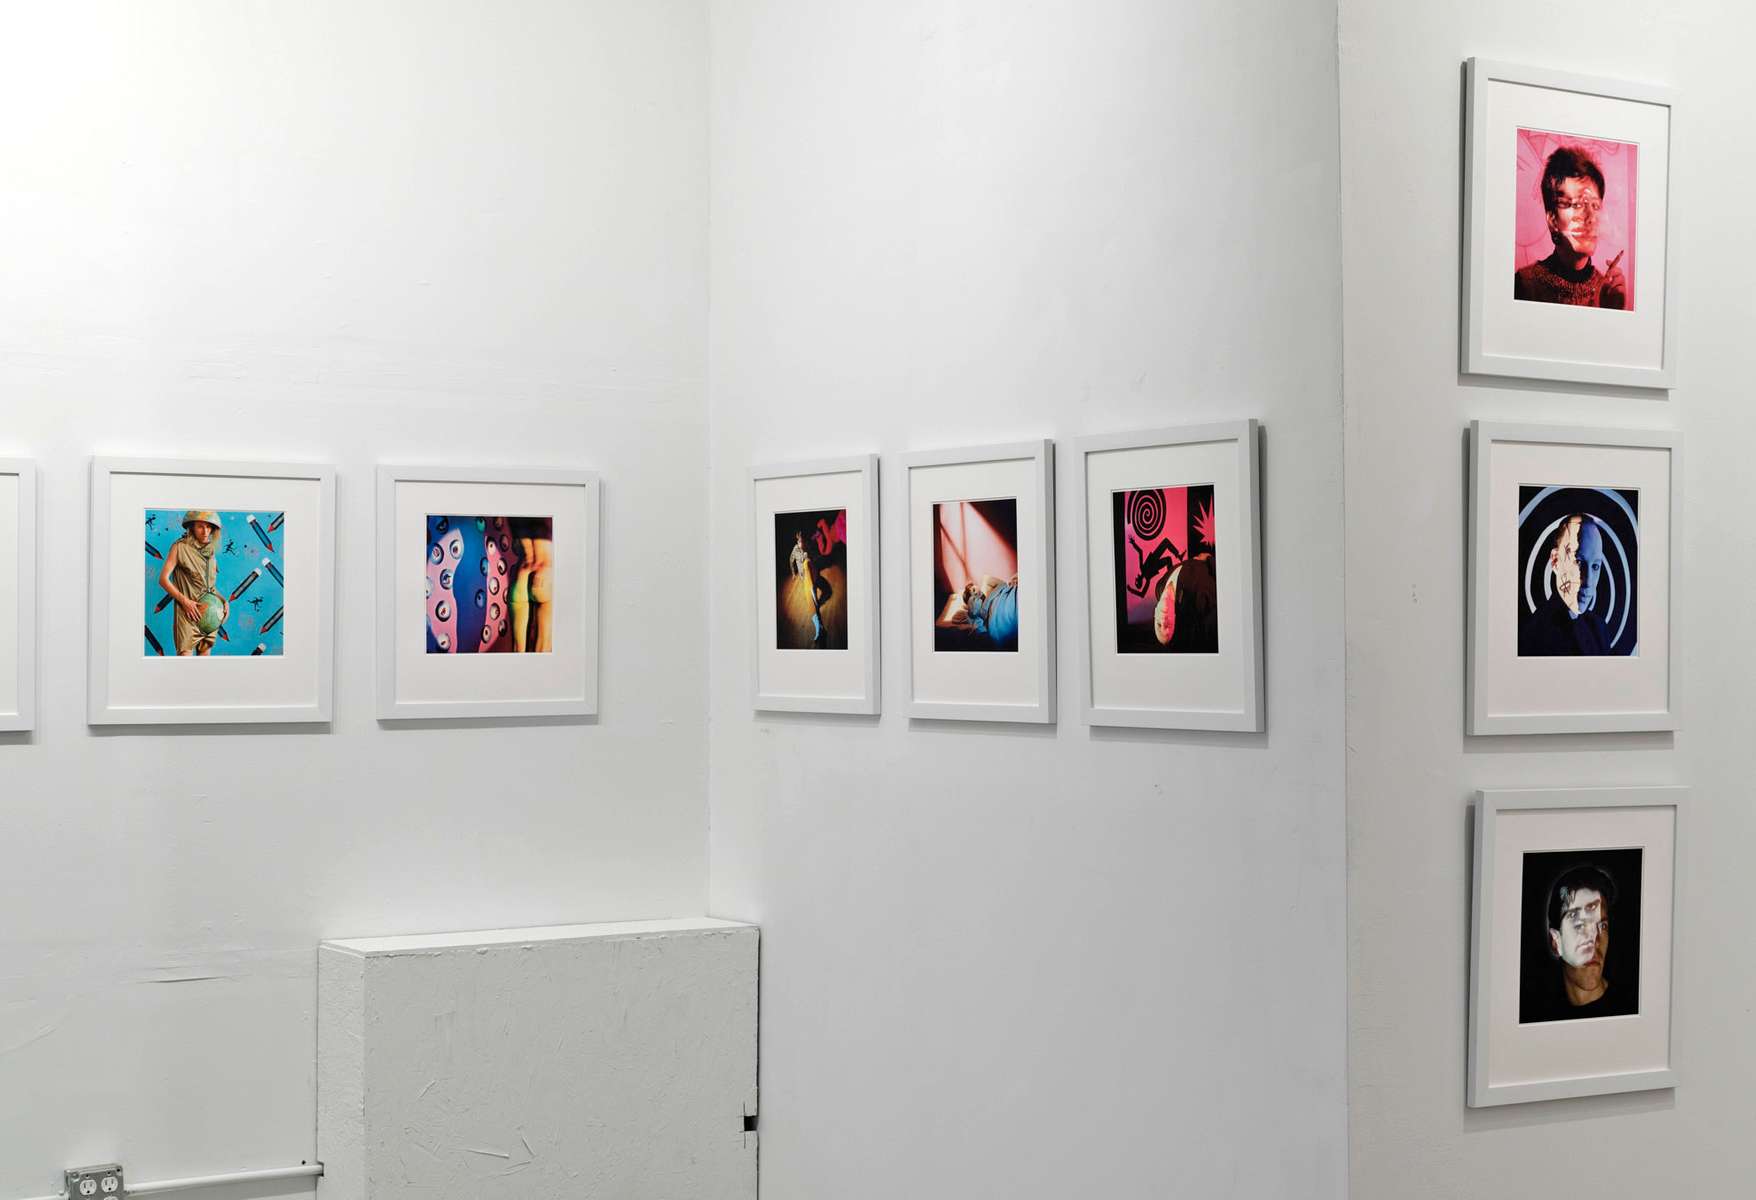 Installation view of Gillen's photographs